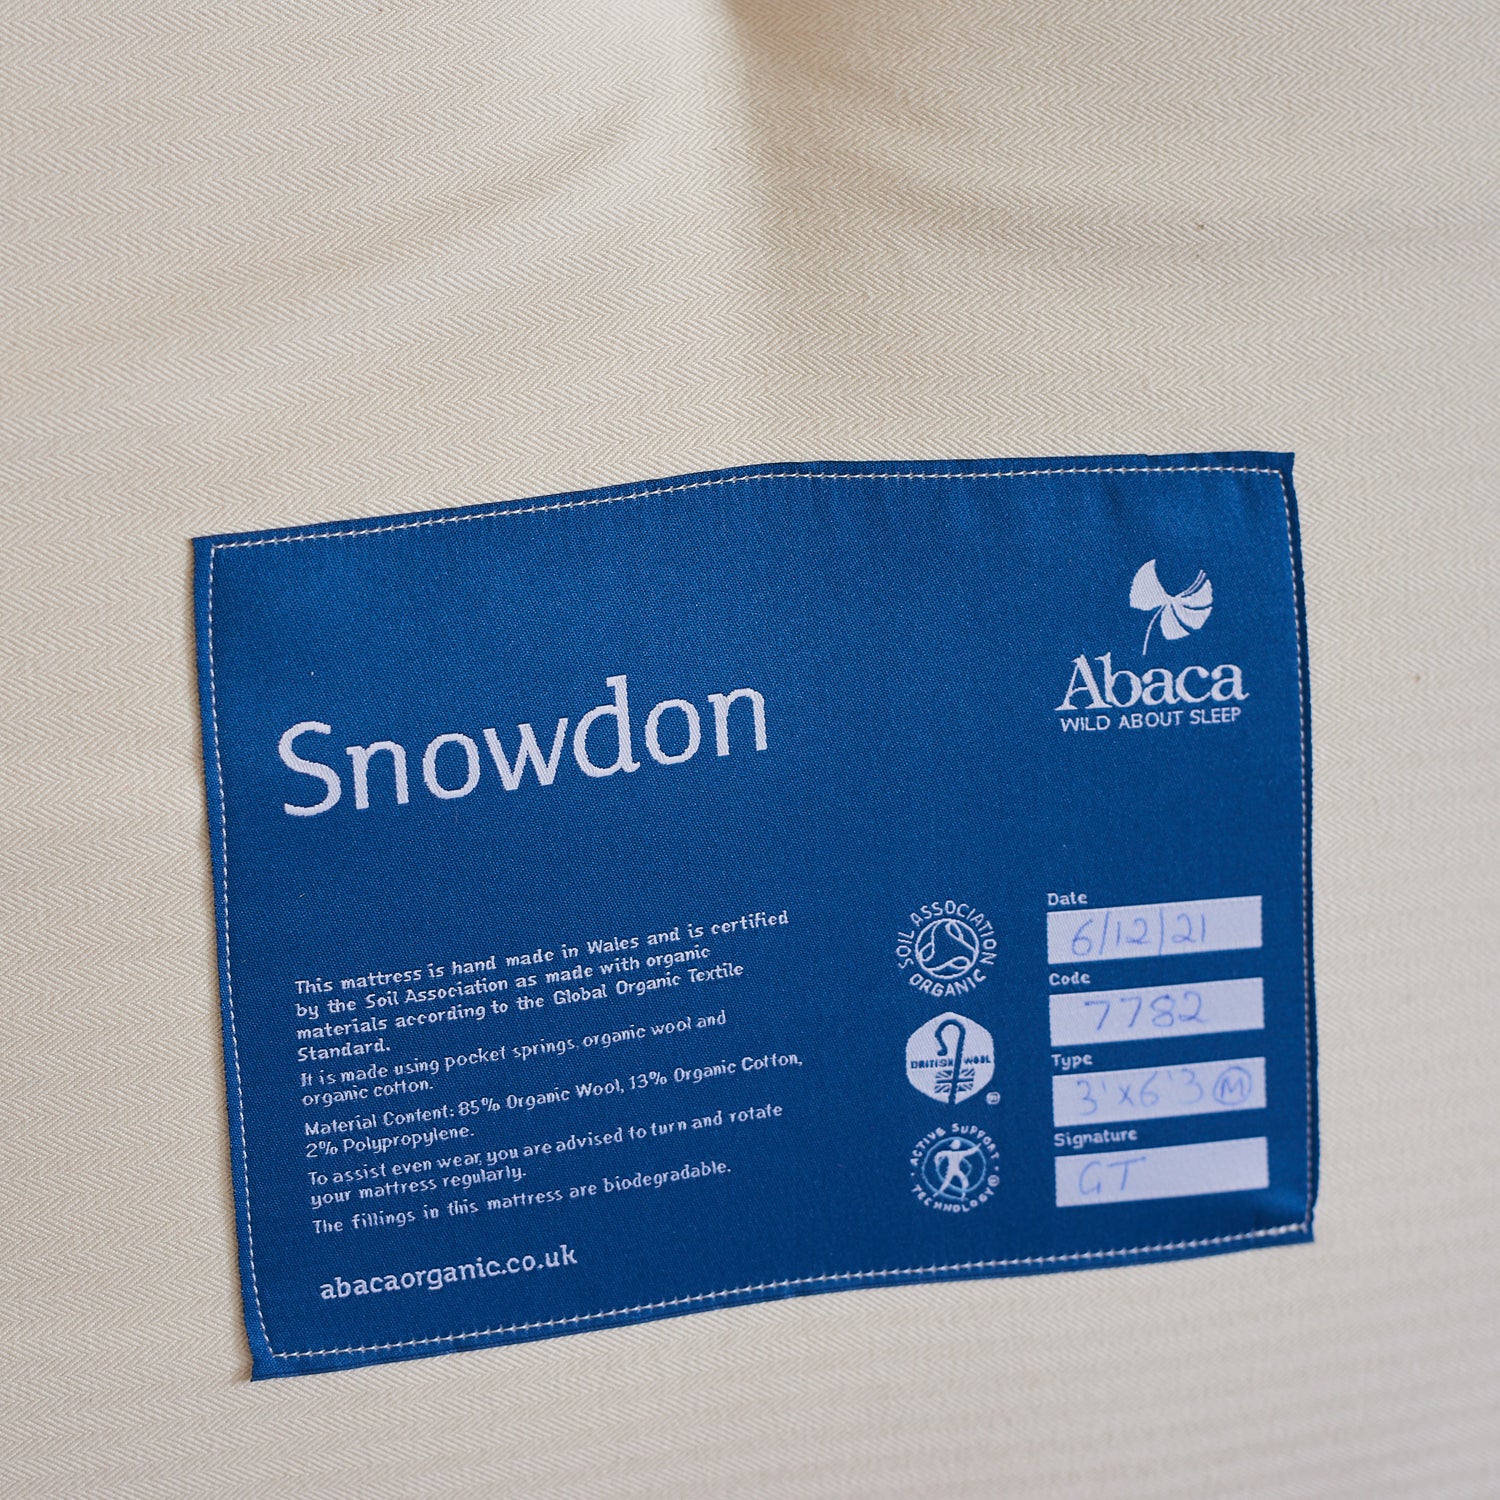 Snowdon - Abaca Mattresses